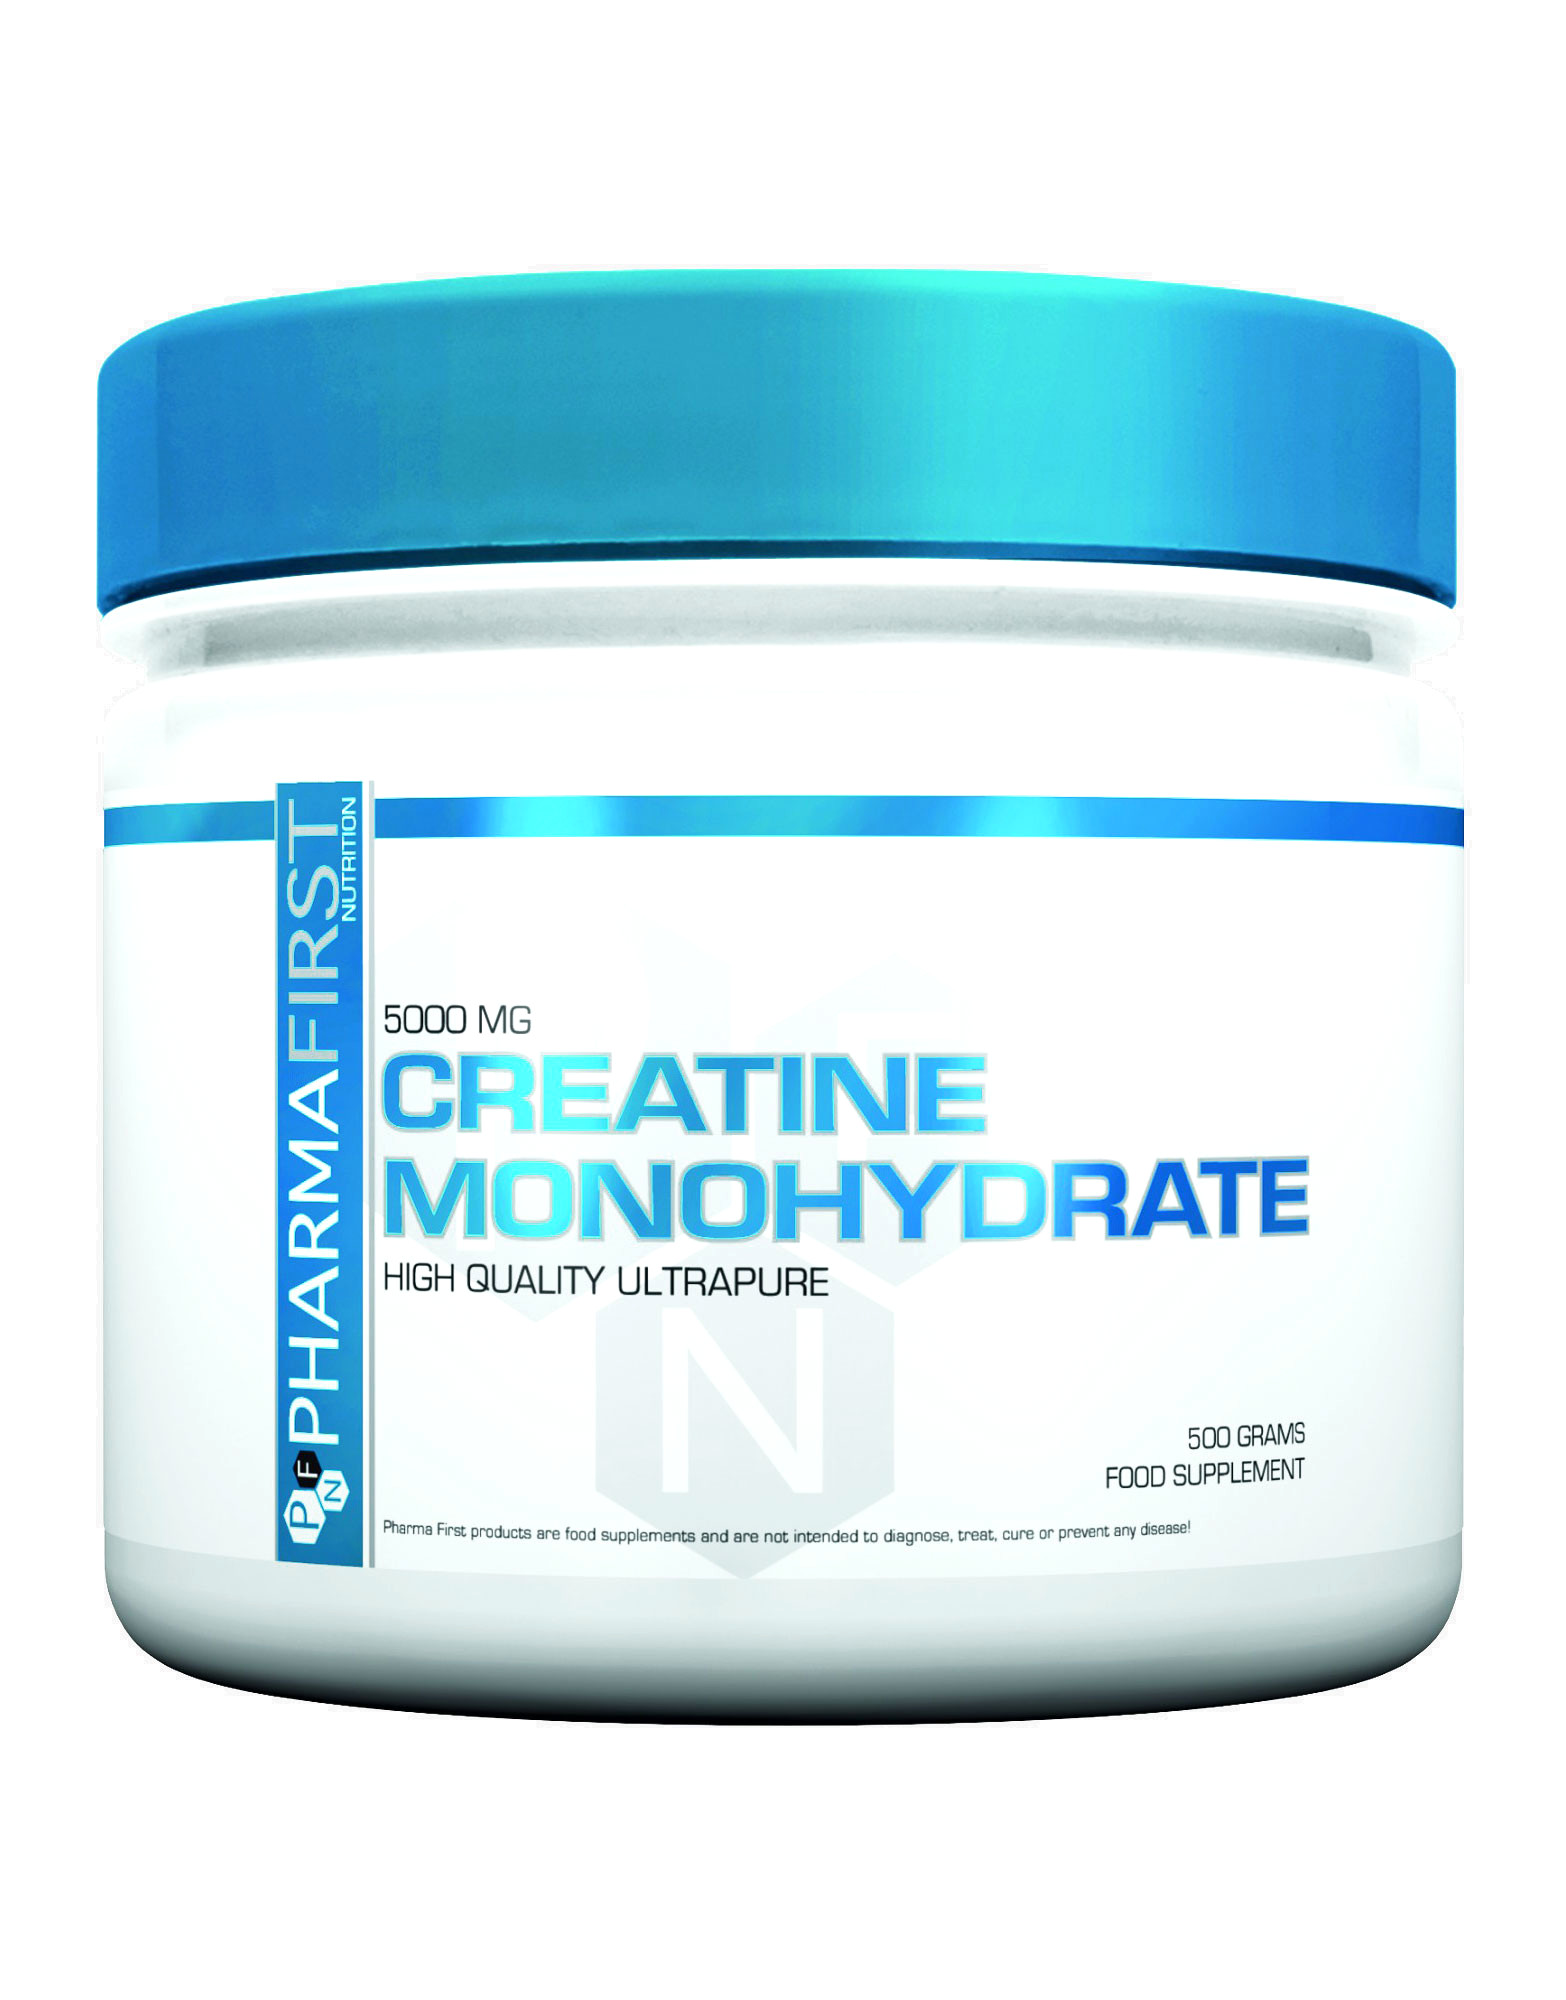 Creatine Monohydrate by PHARMA FIRST (500 grams)